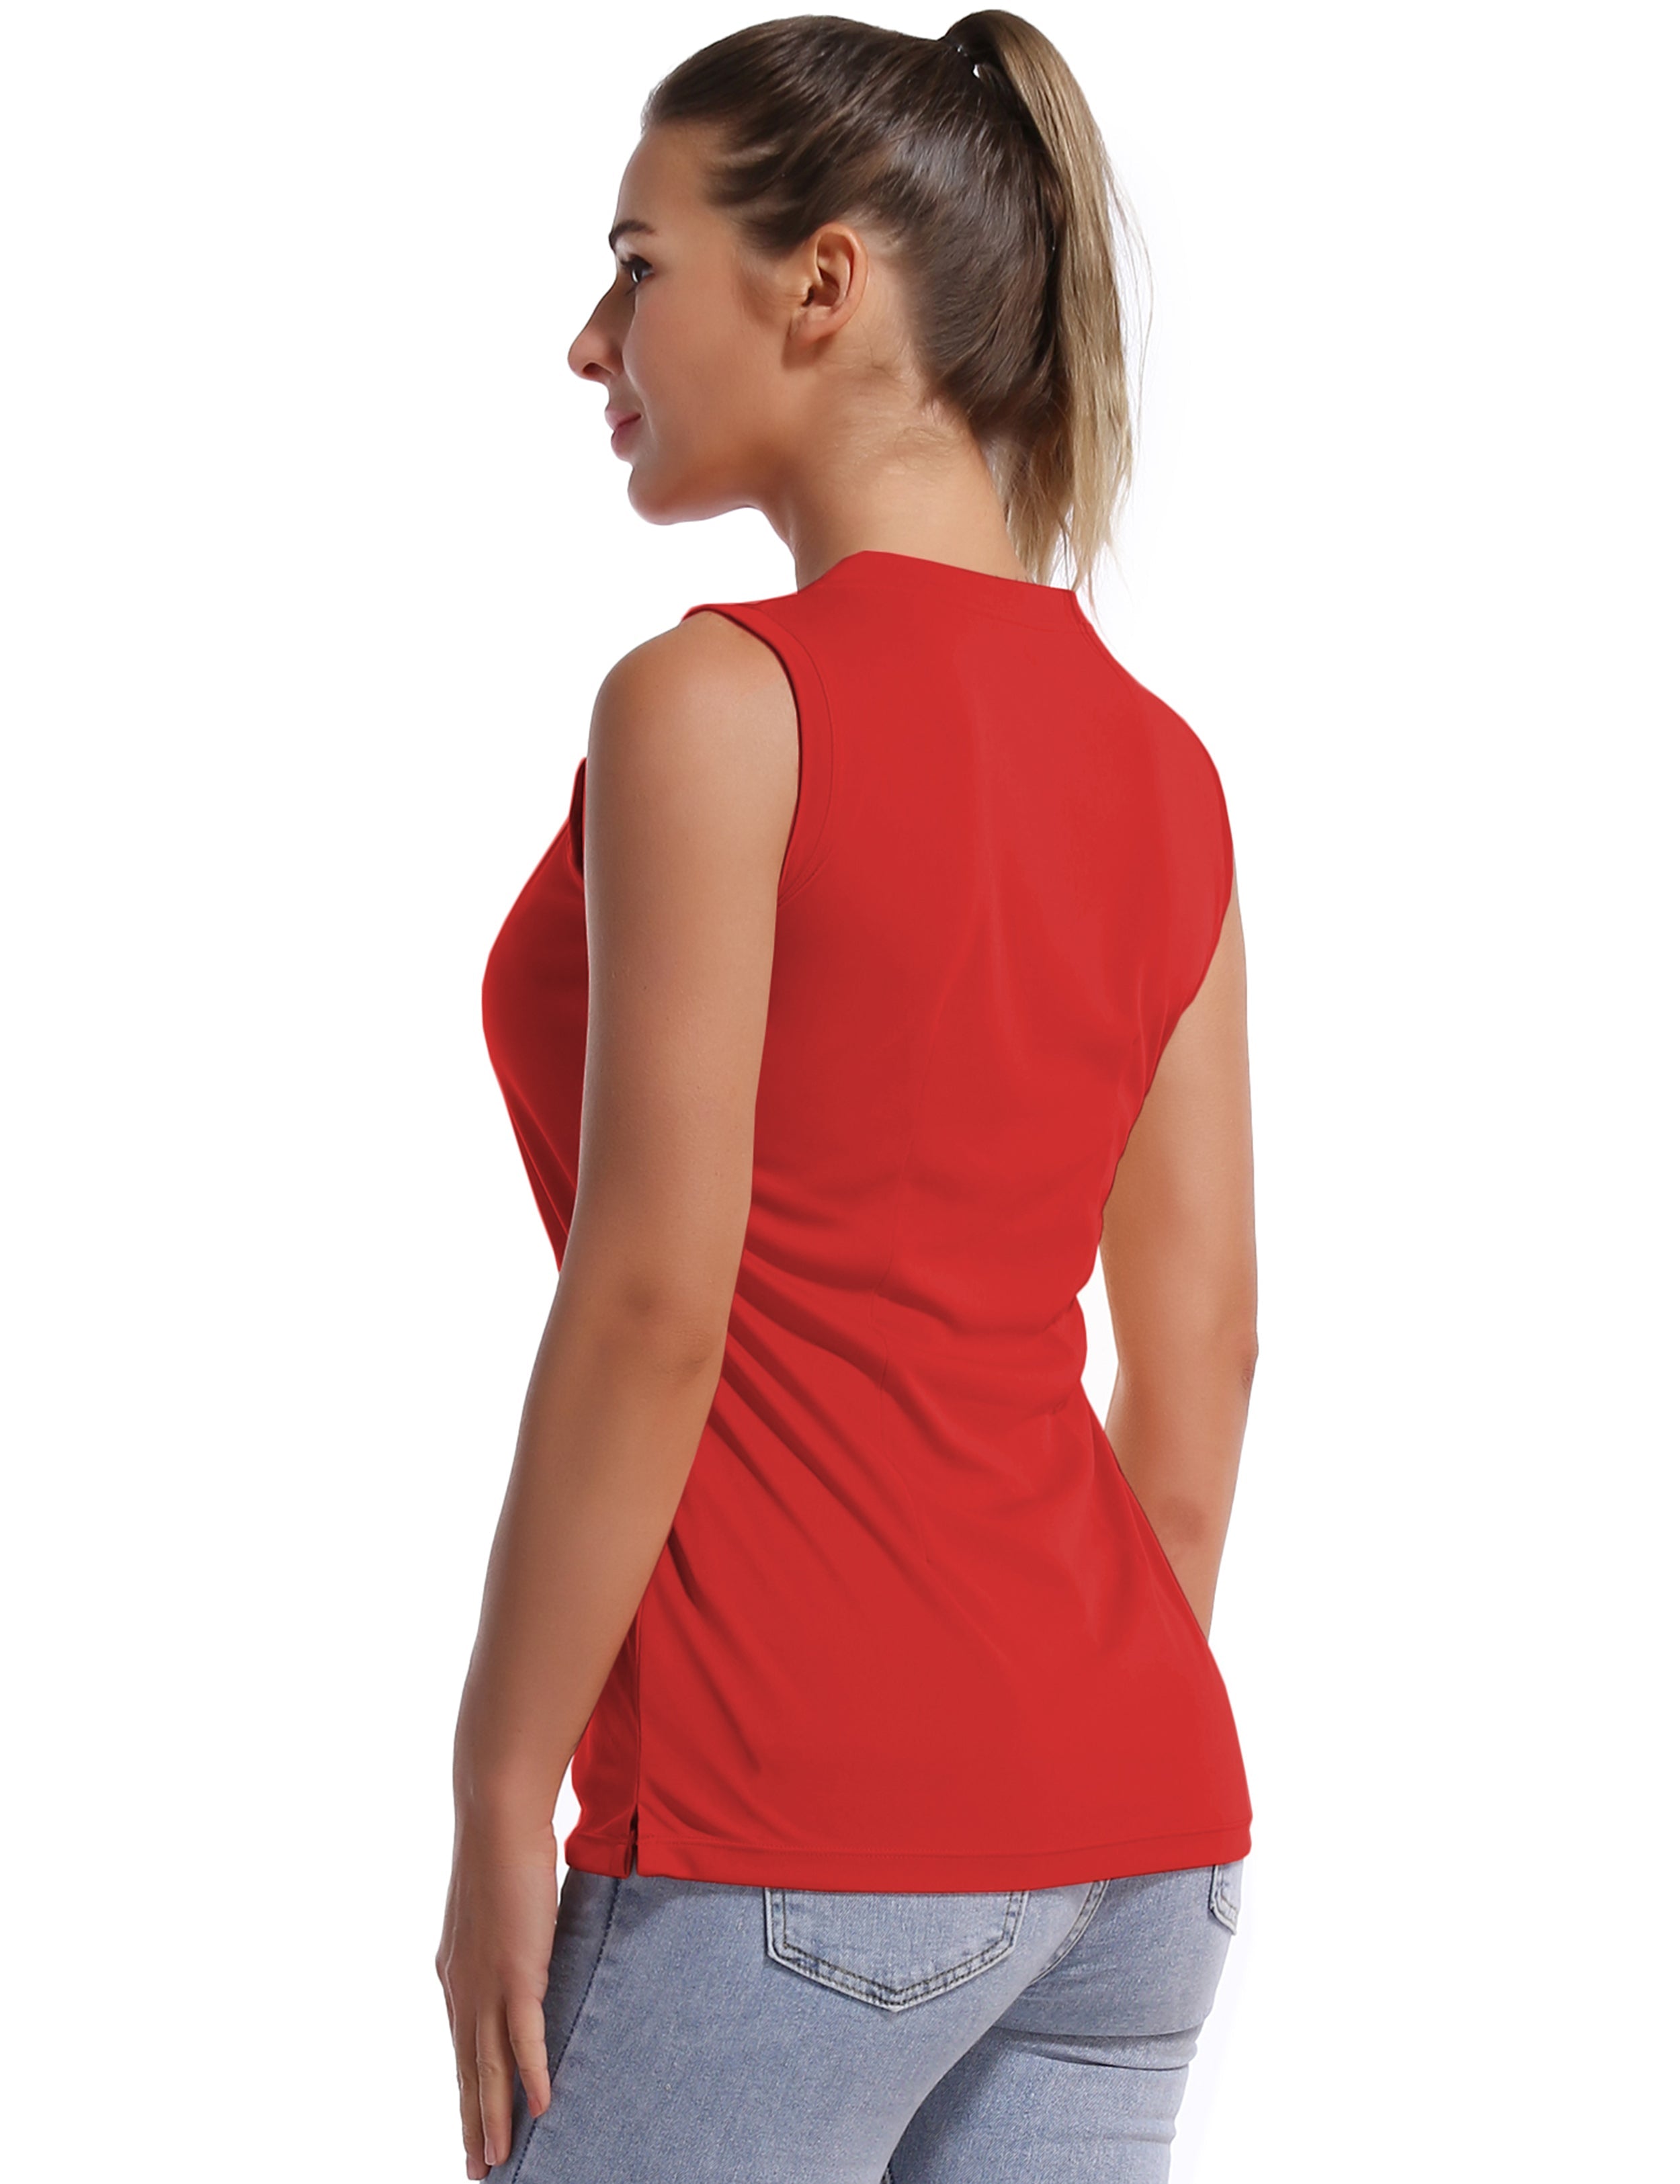 V Neck Sleeveless Athletic Shirts red_Pilates